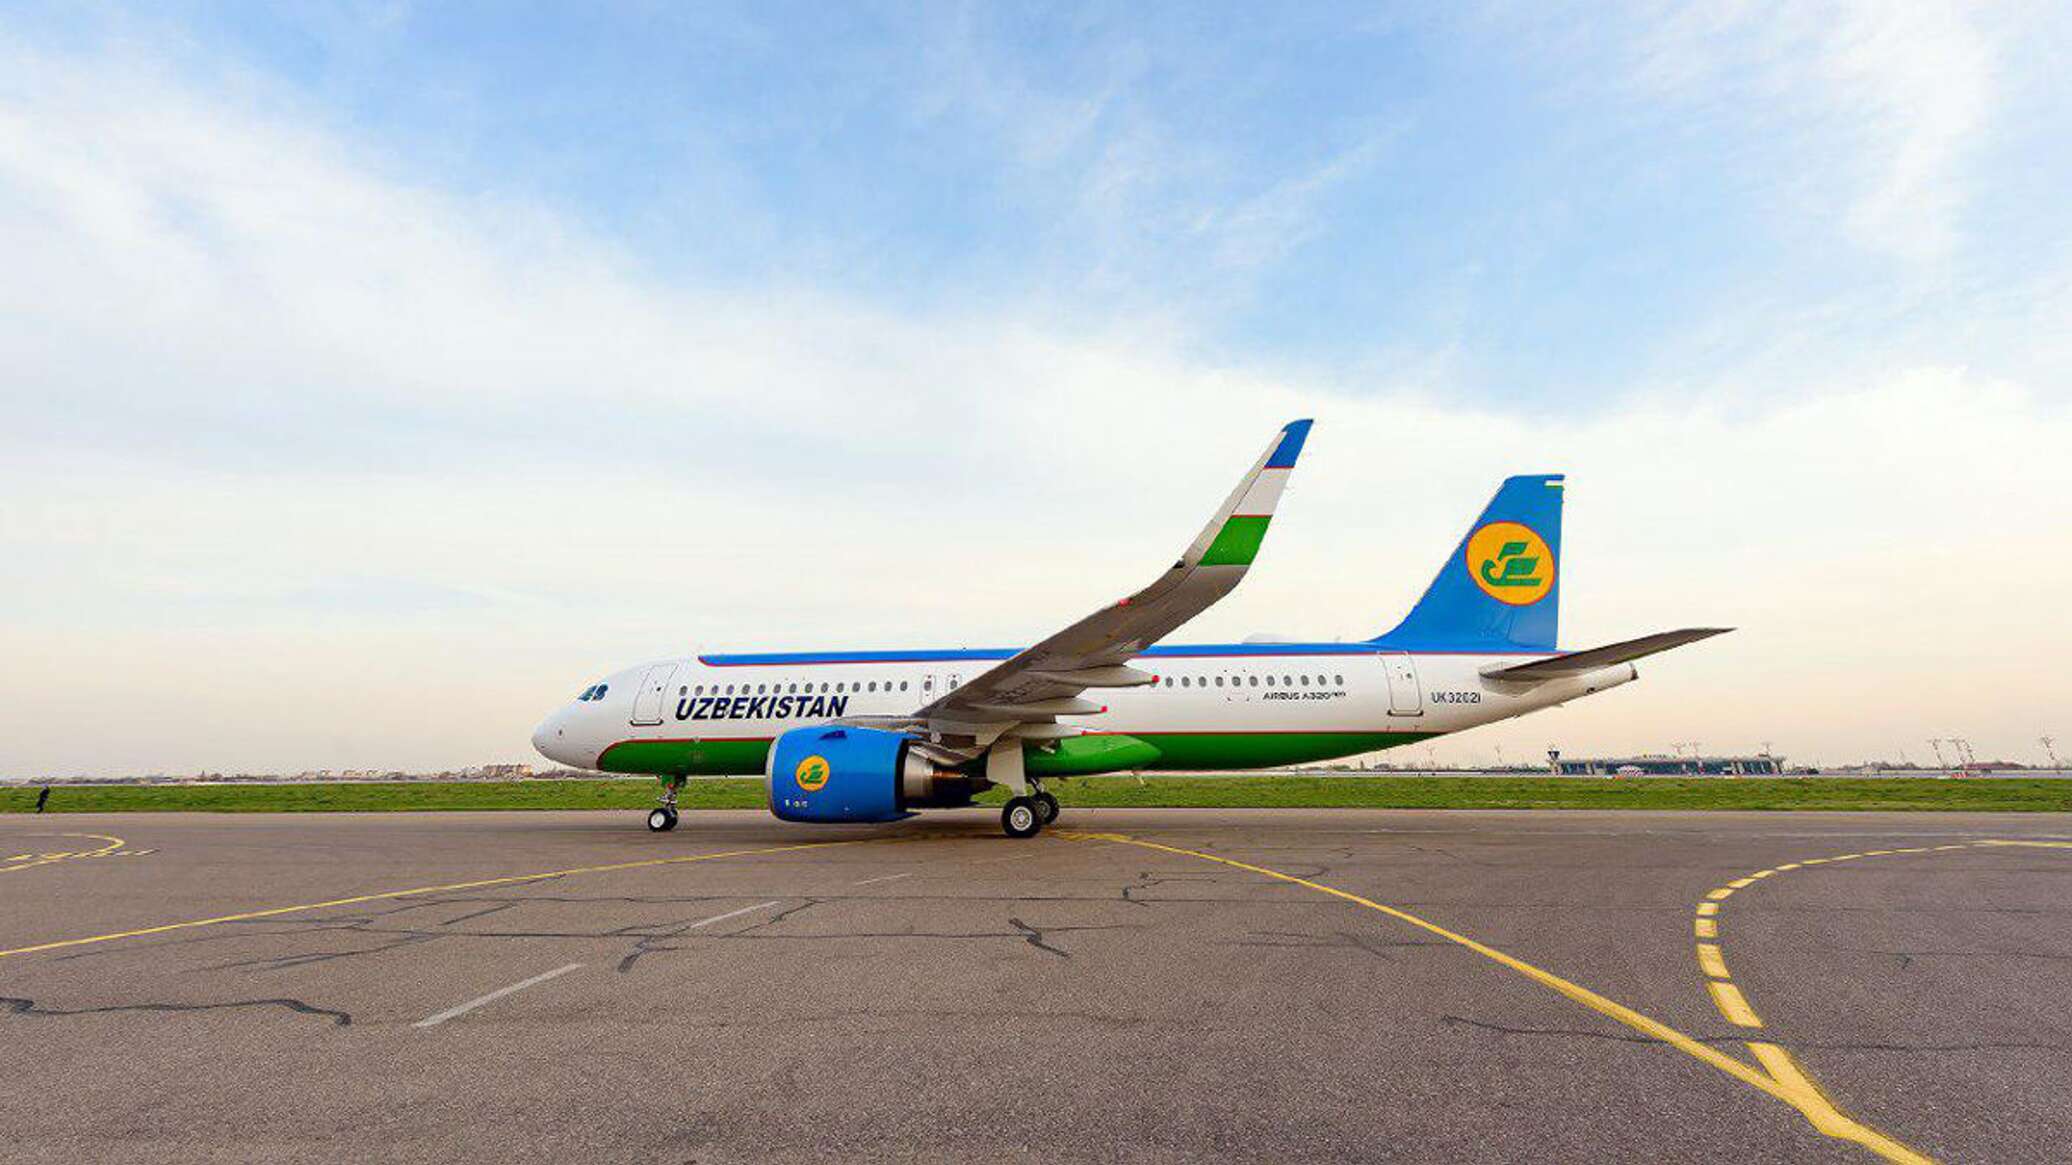 Авиакомпания узбекистан хаво йуллари (uzbekistan airways)